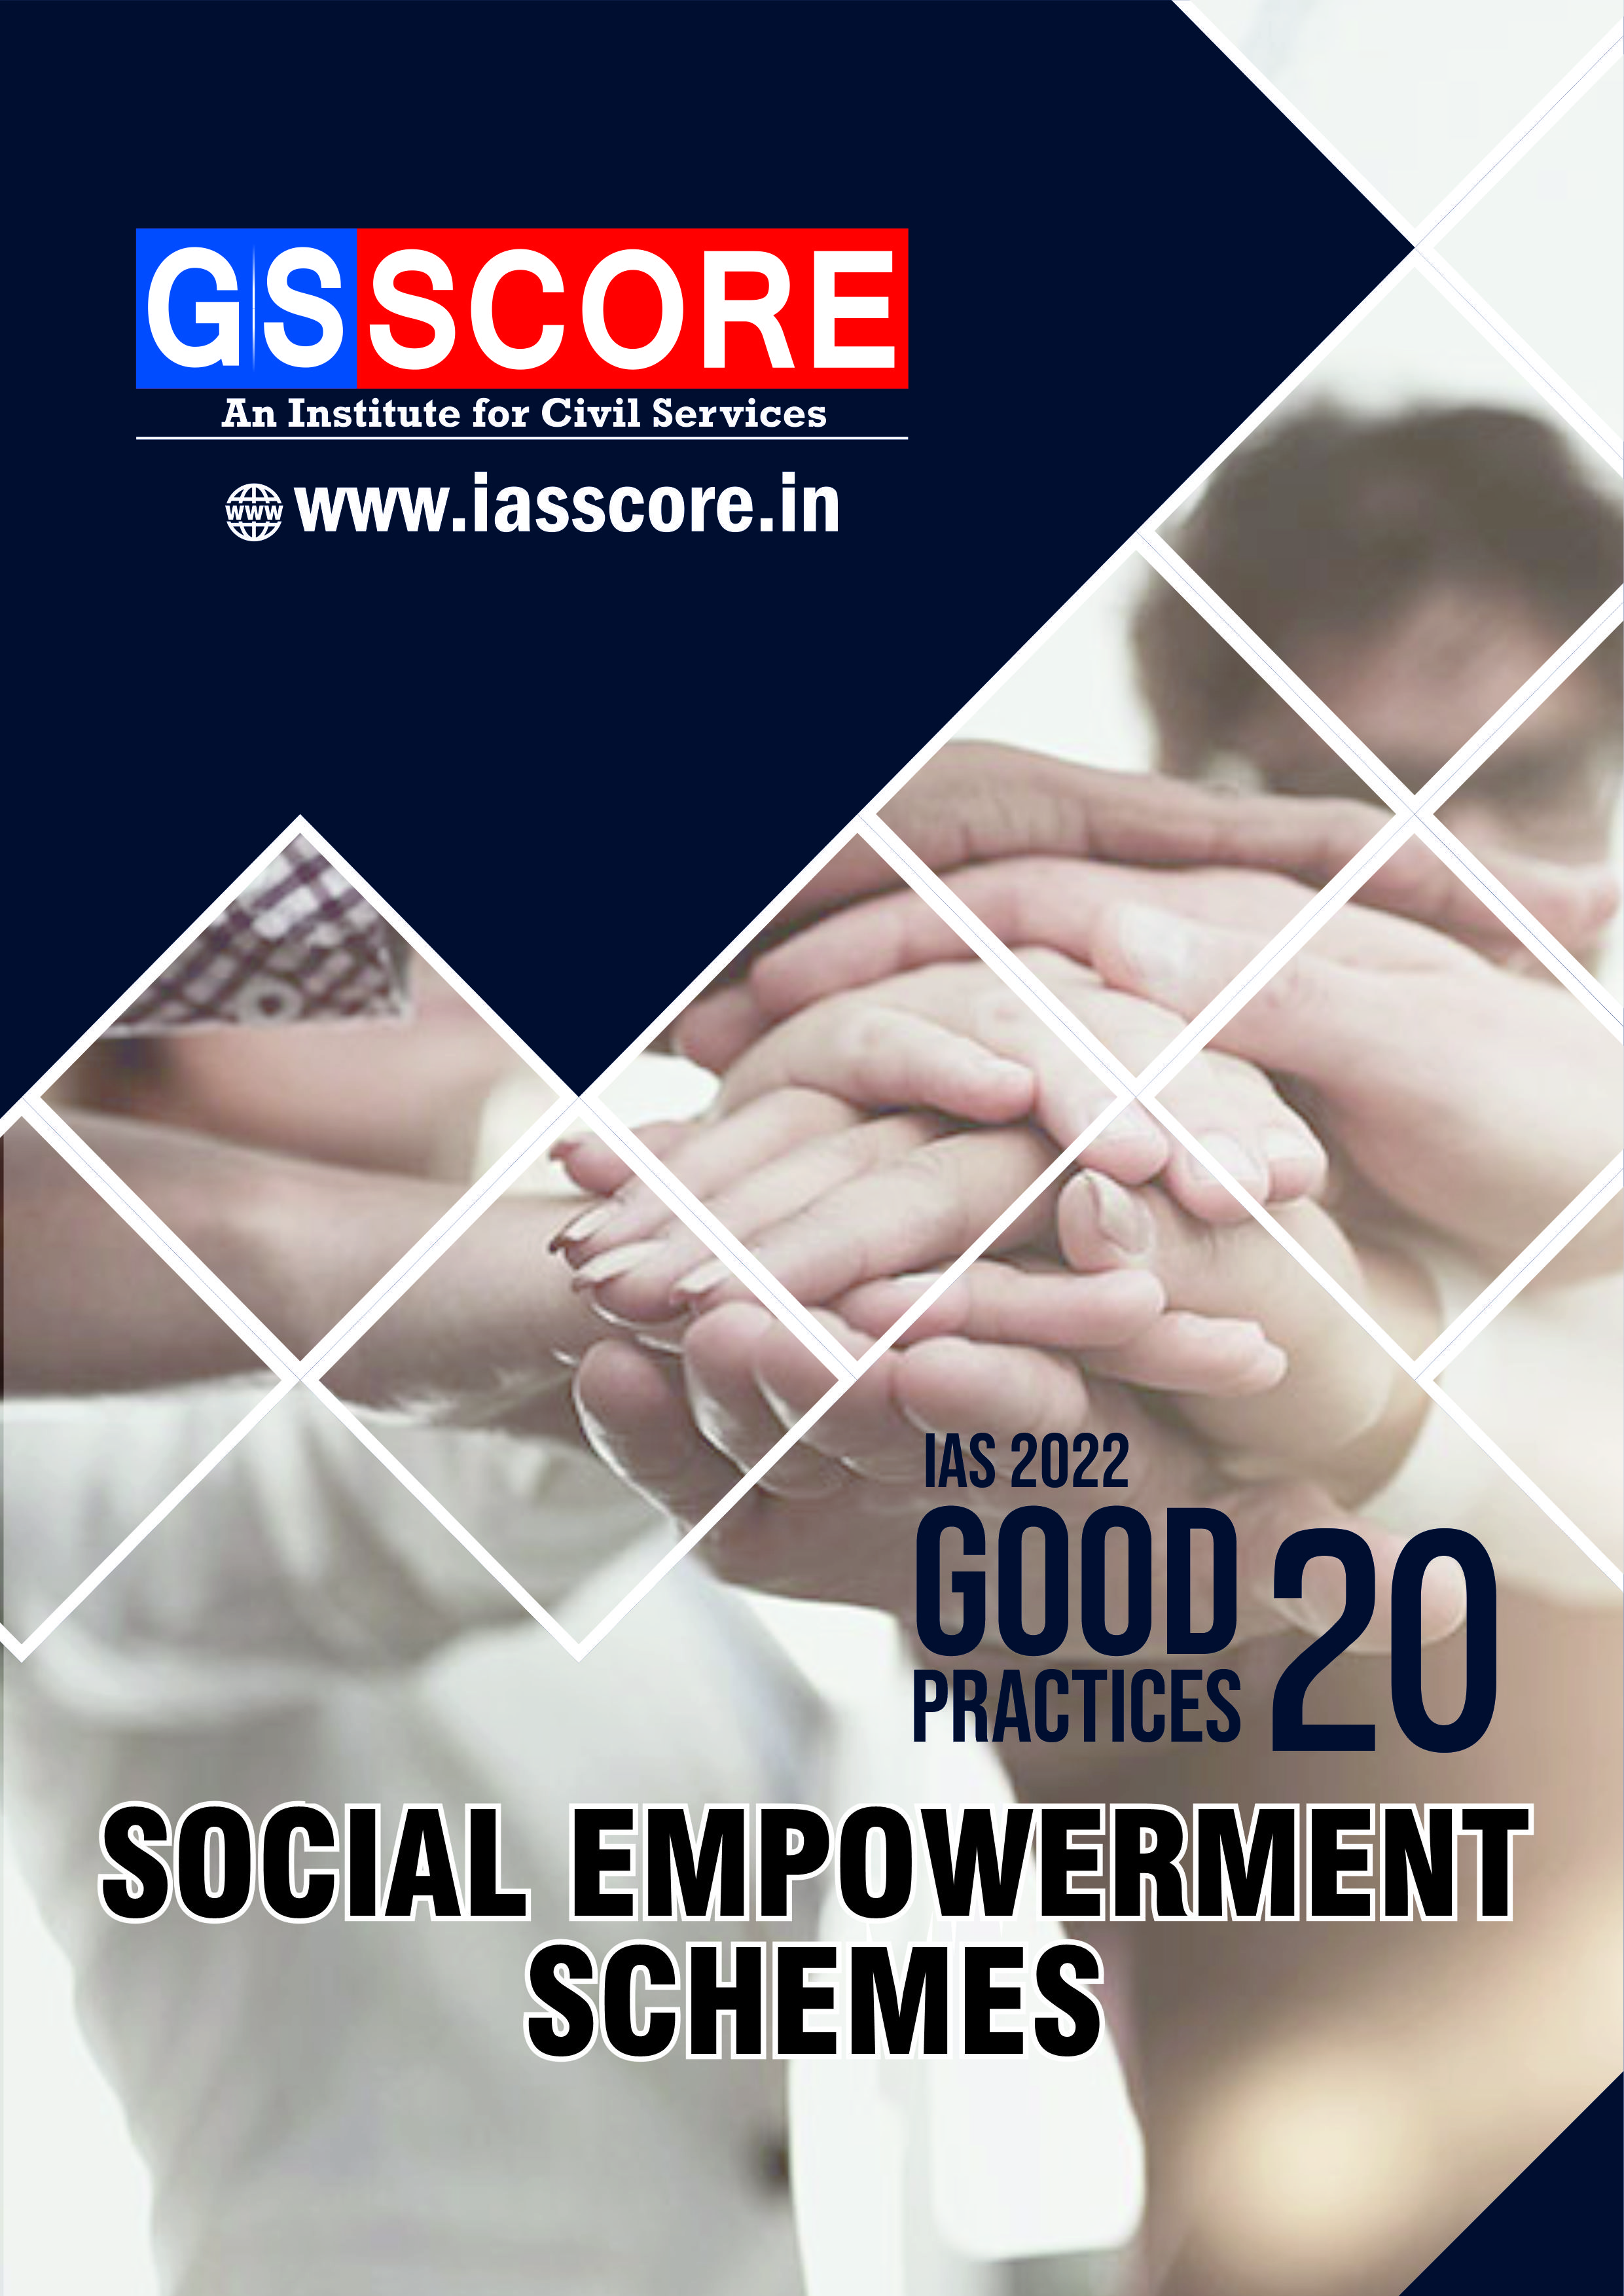 Good Practices: Social Empowerment Schemes